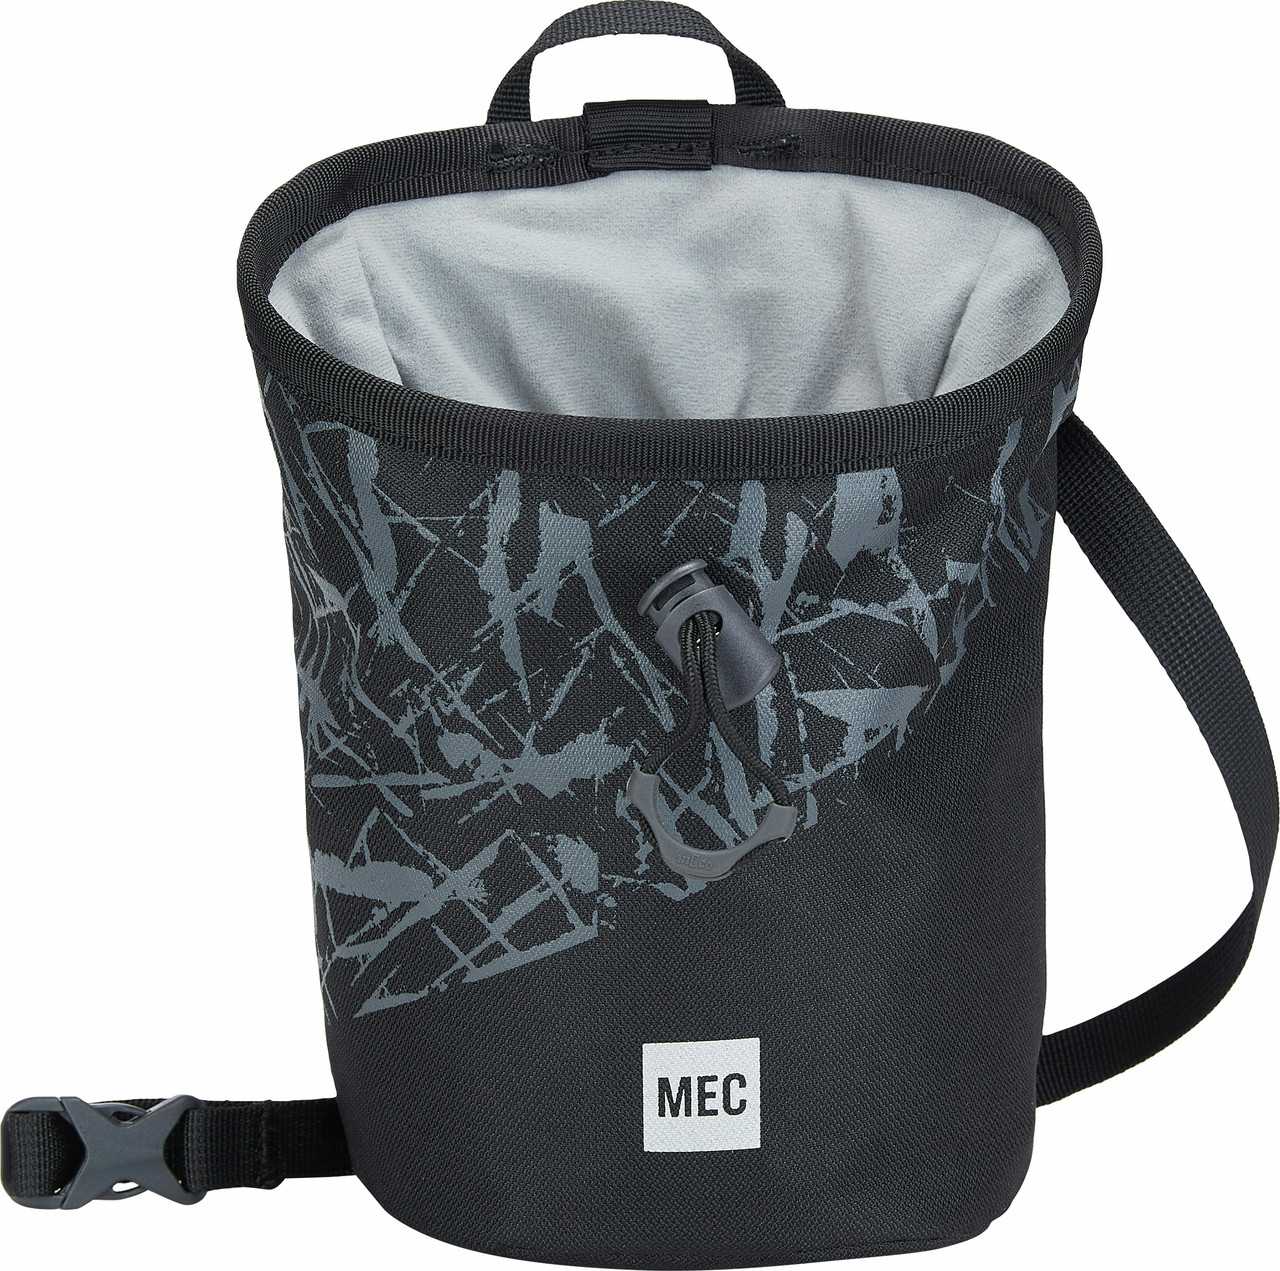 Edge Chalk Bag Black/Grey Shard Graphic